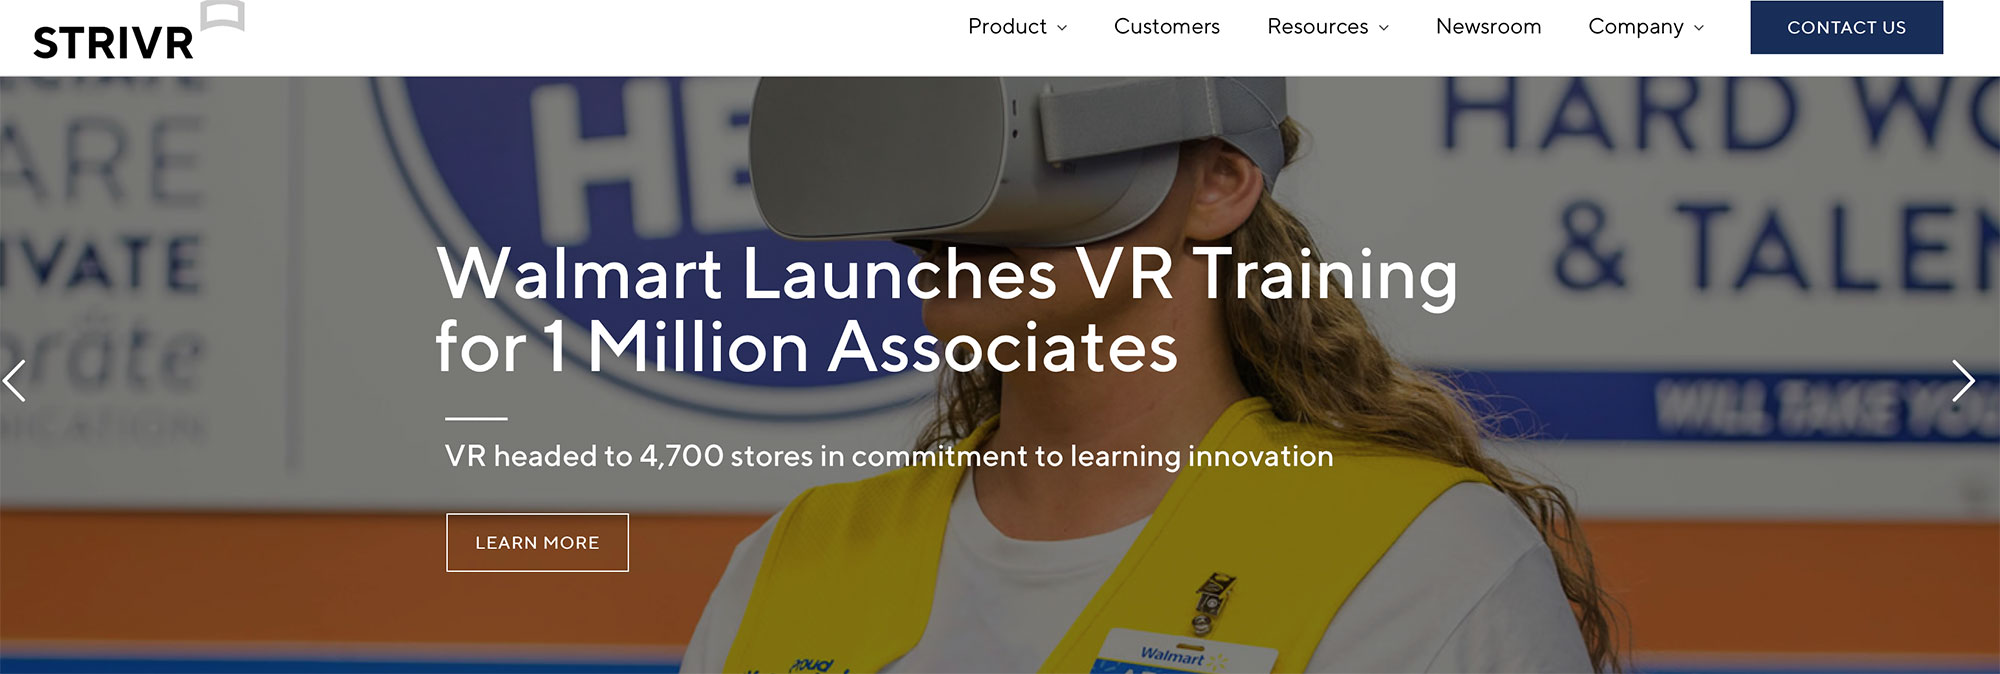 Walmart is using VR to train 1 million associates